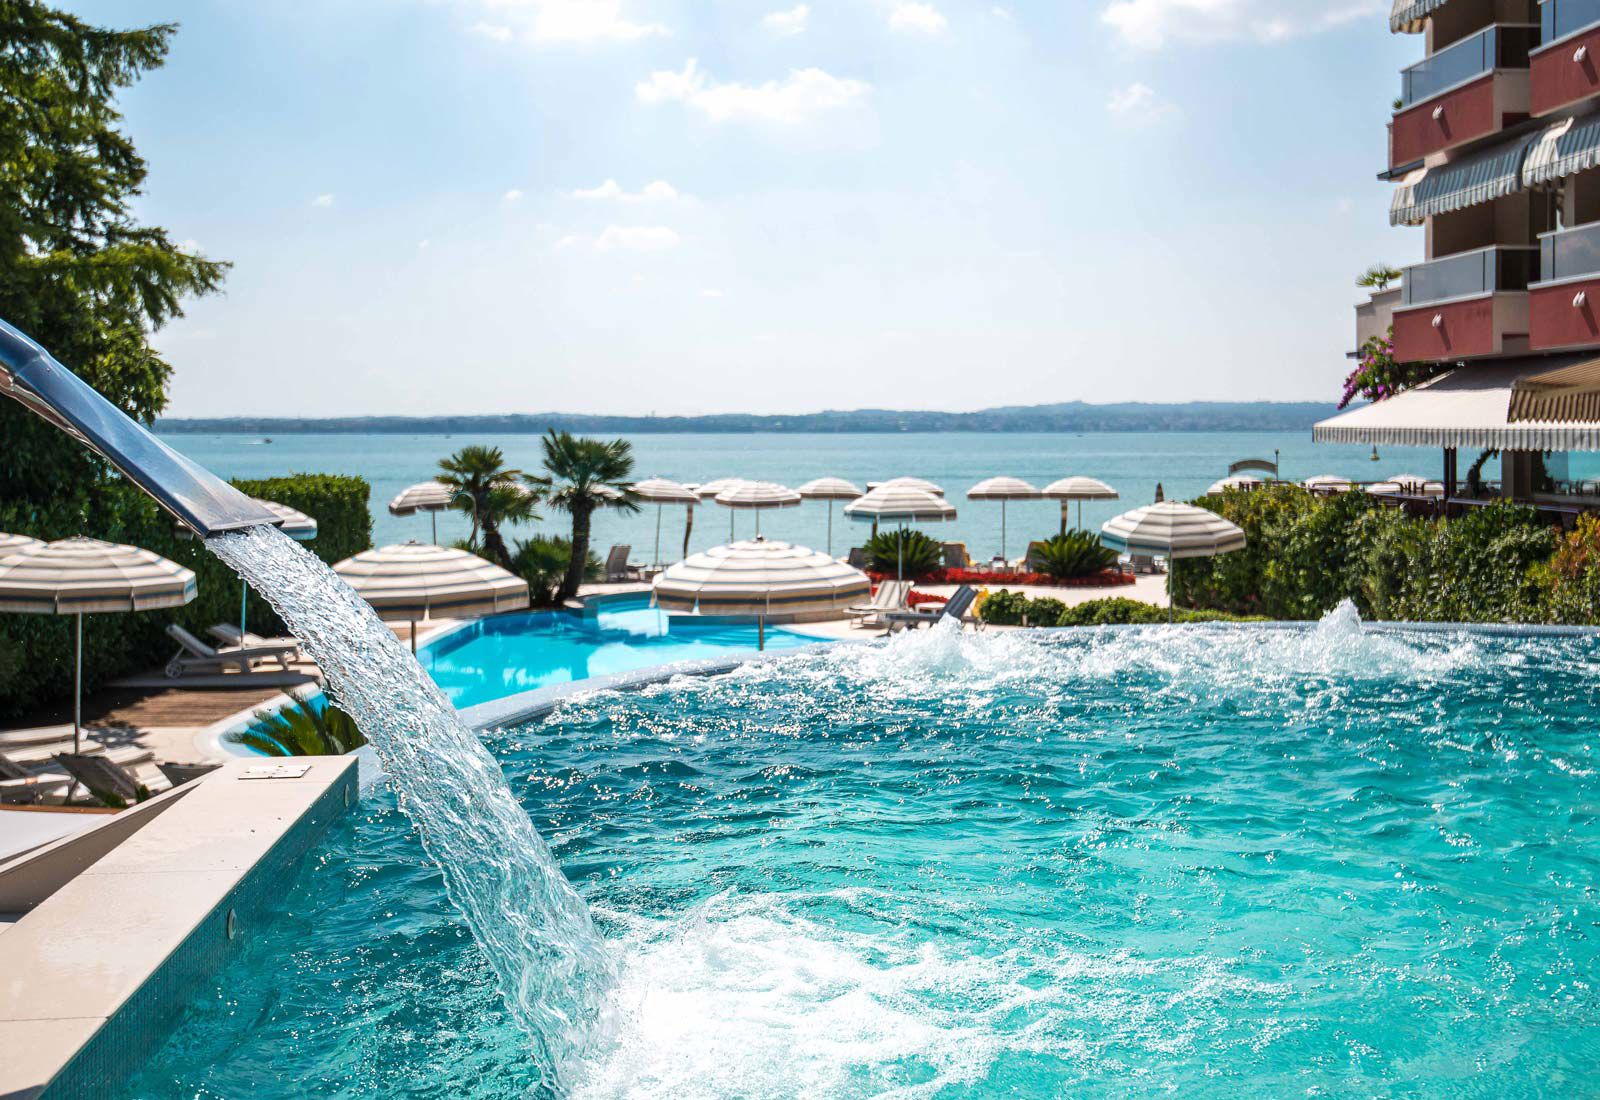 4-star Hotel with pool on Lake Garda 4